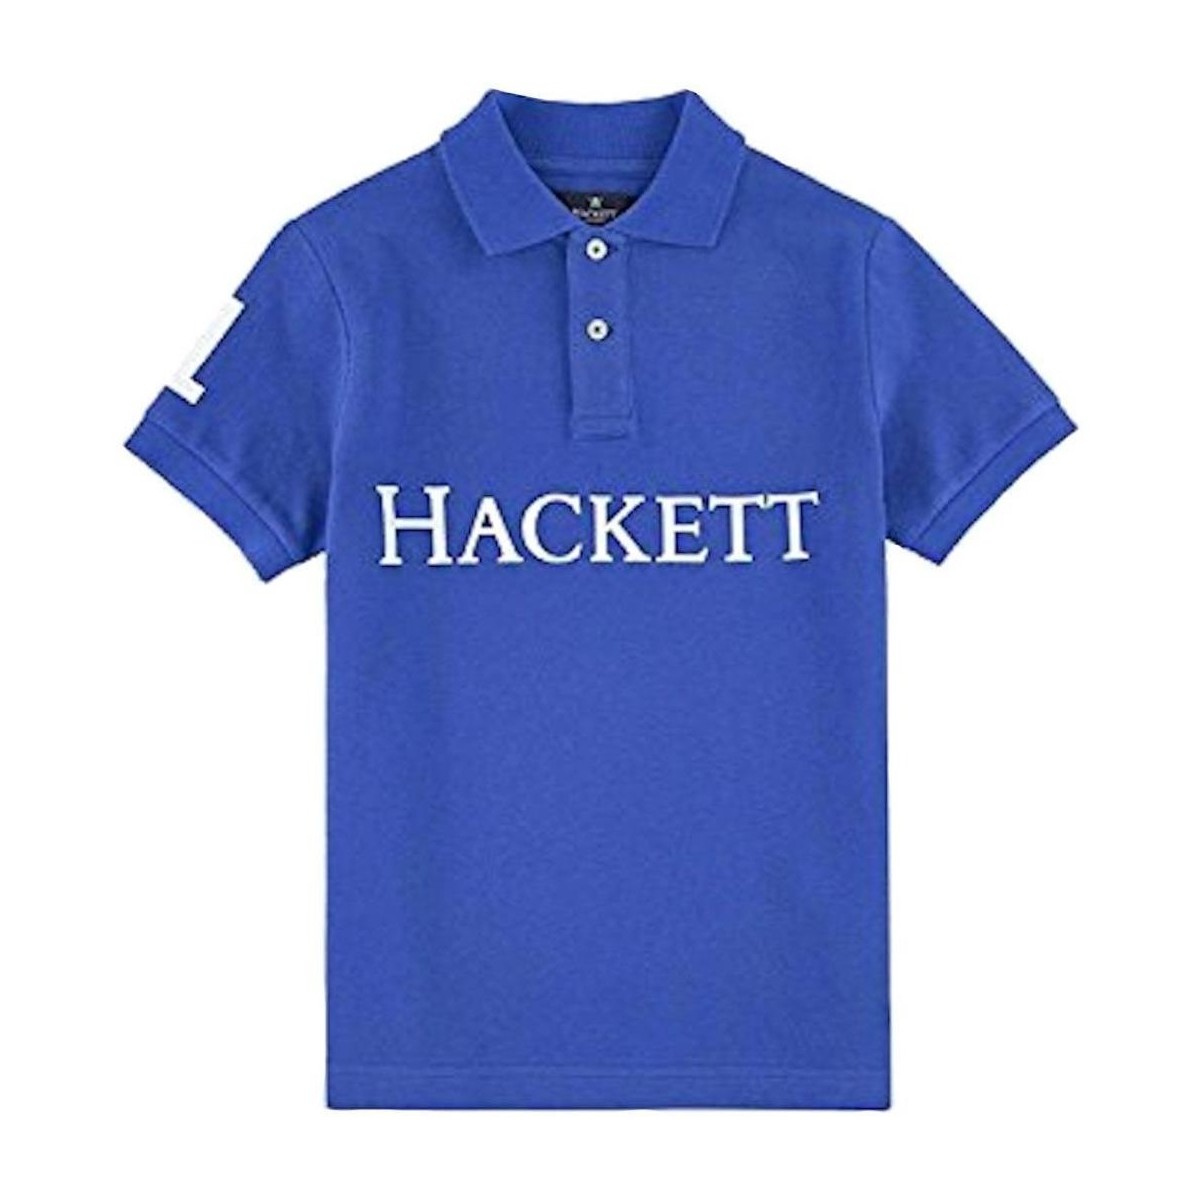 Hackett Bleu il1aZa1E